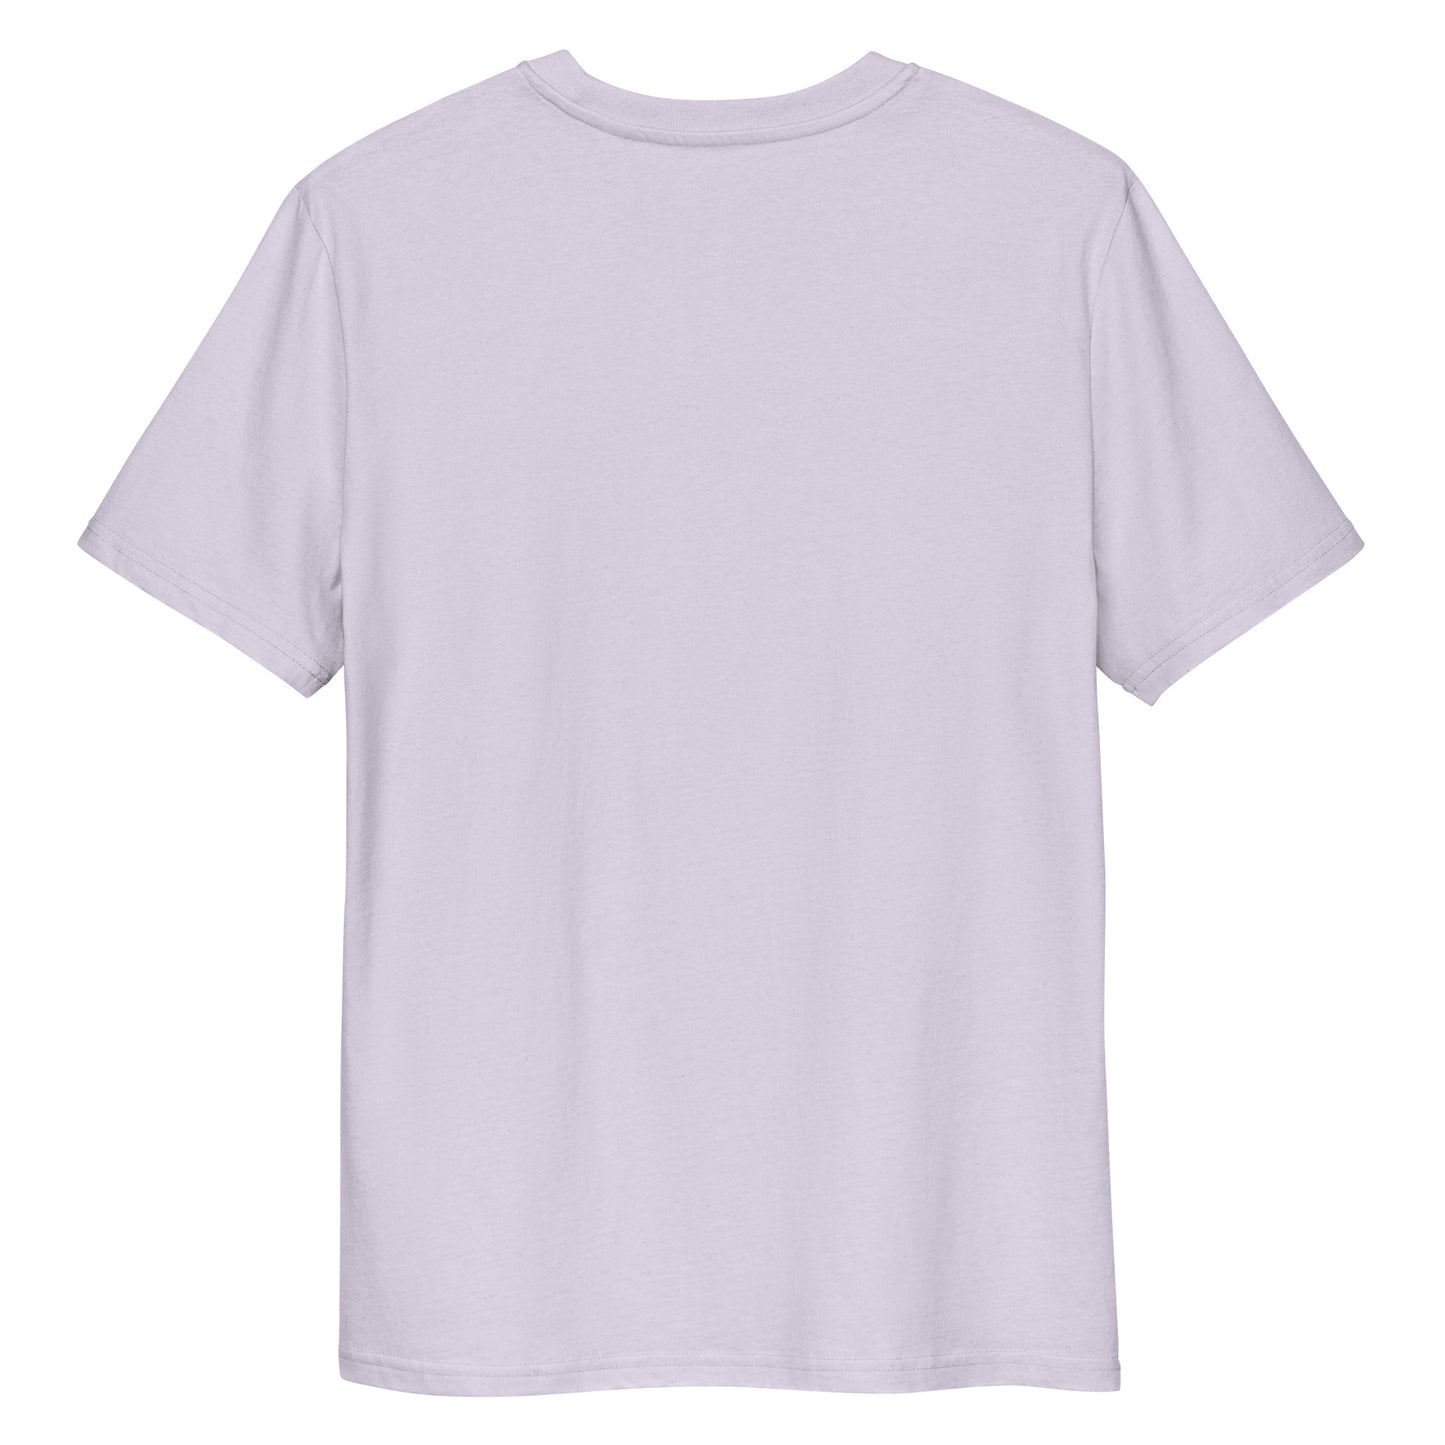 Señor Consultant Unisex Organic Cotton T-Shirt